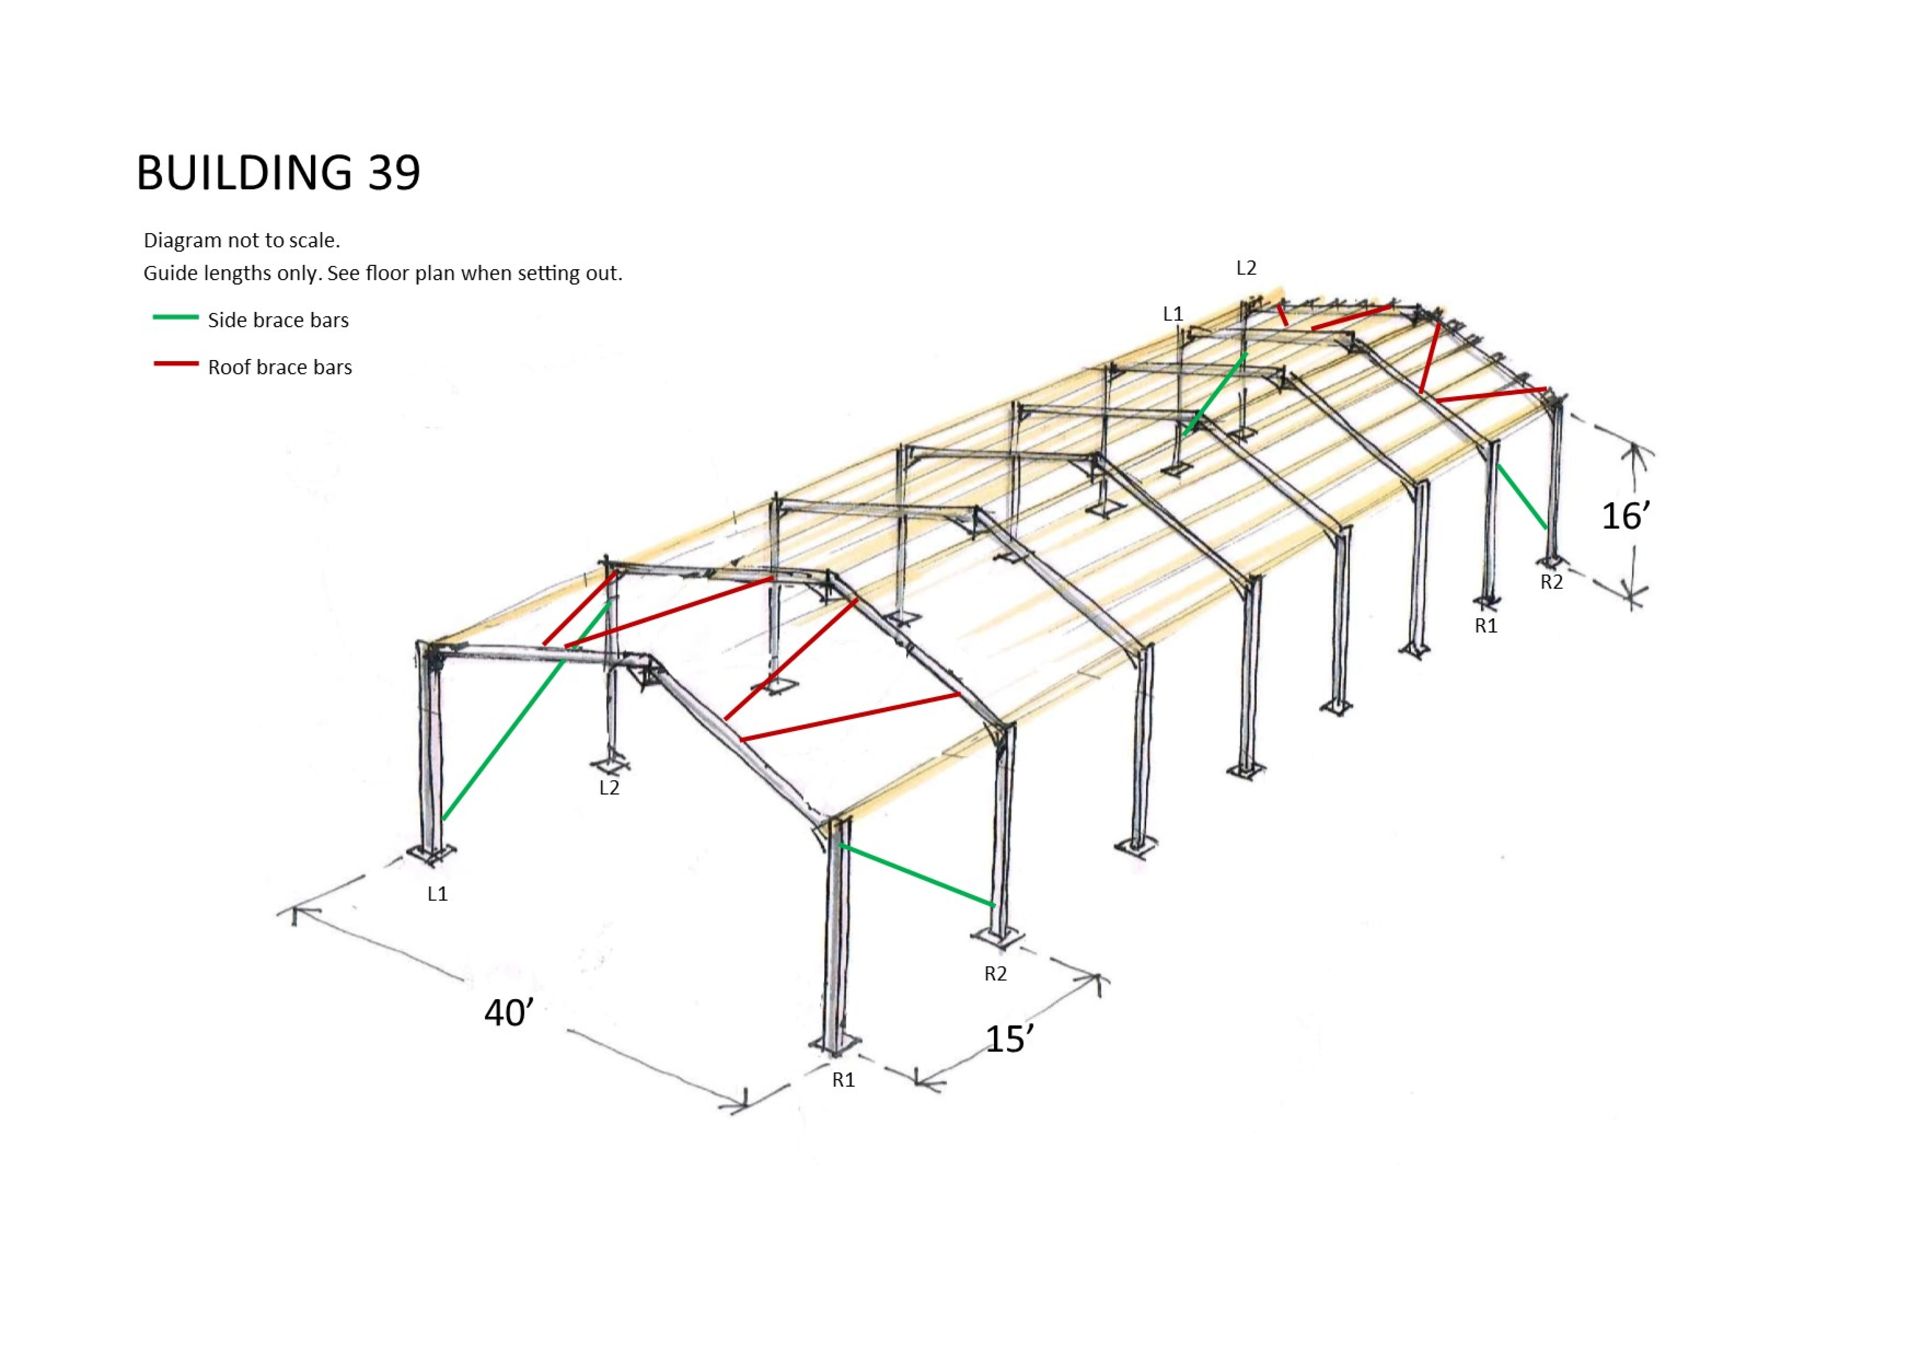 Steel framed building 105ft long x 40 ft wide x 16 ft @ eaves 12 .5 deg roof pitch - Image 12 of 13